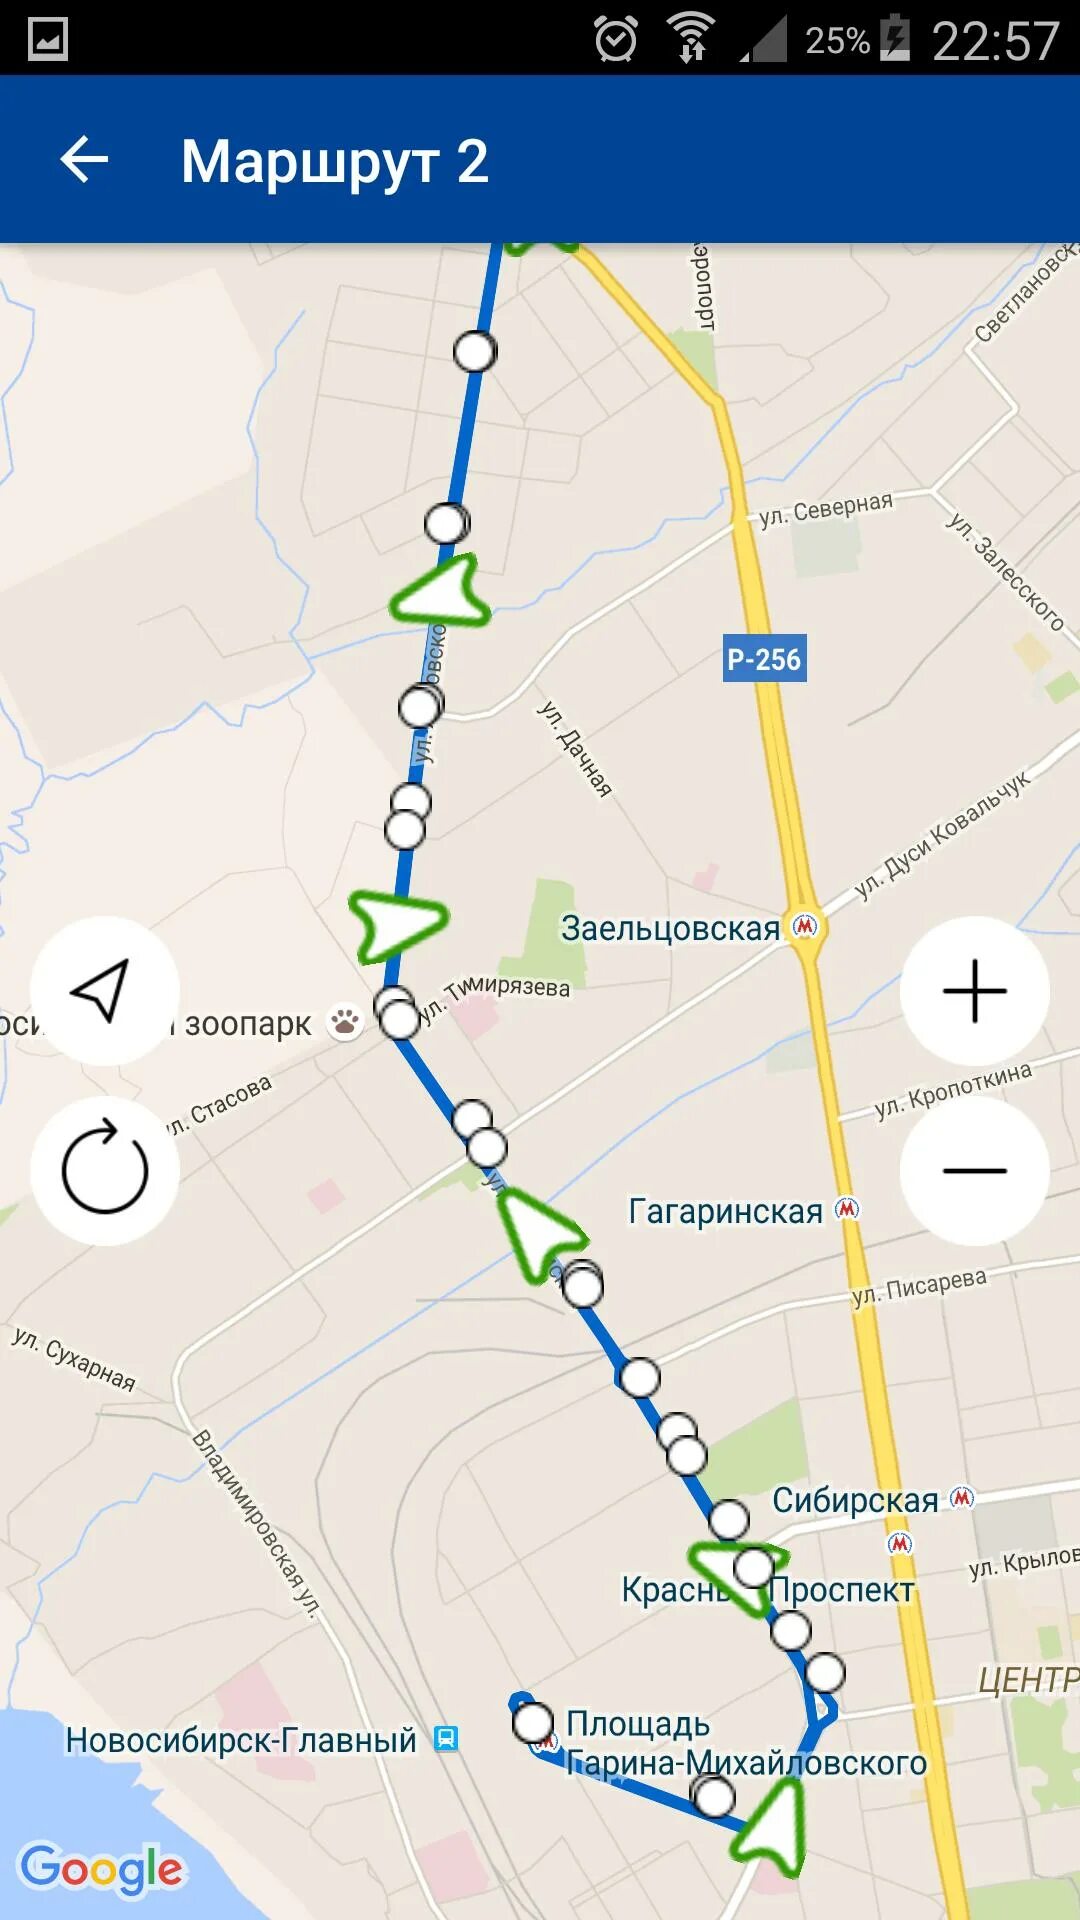 Транспорт новосибирск маршрут. Гортранспорт Новосибирск. Название приложений по транспорту Новосибирска.